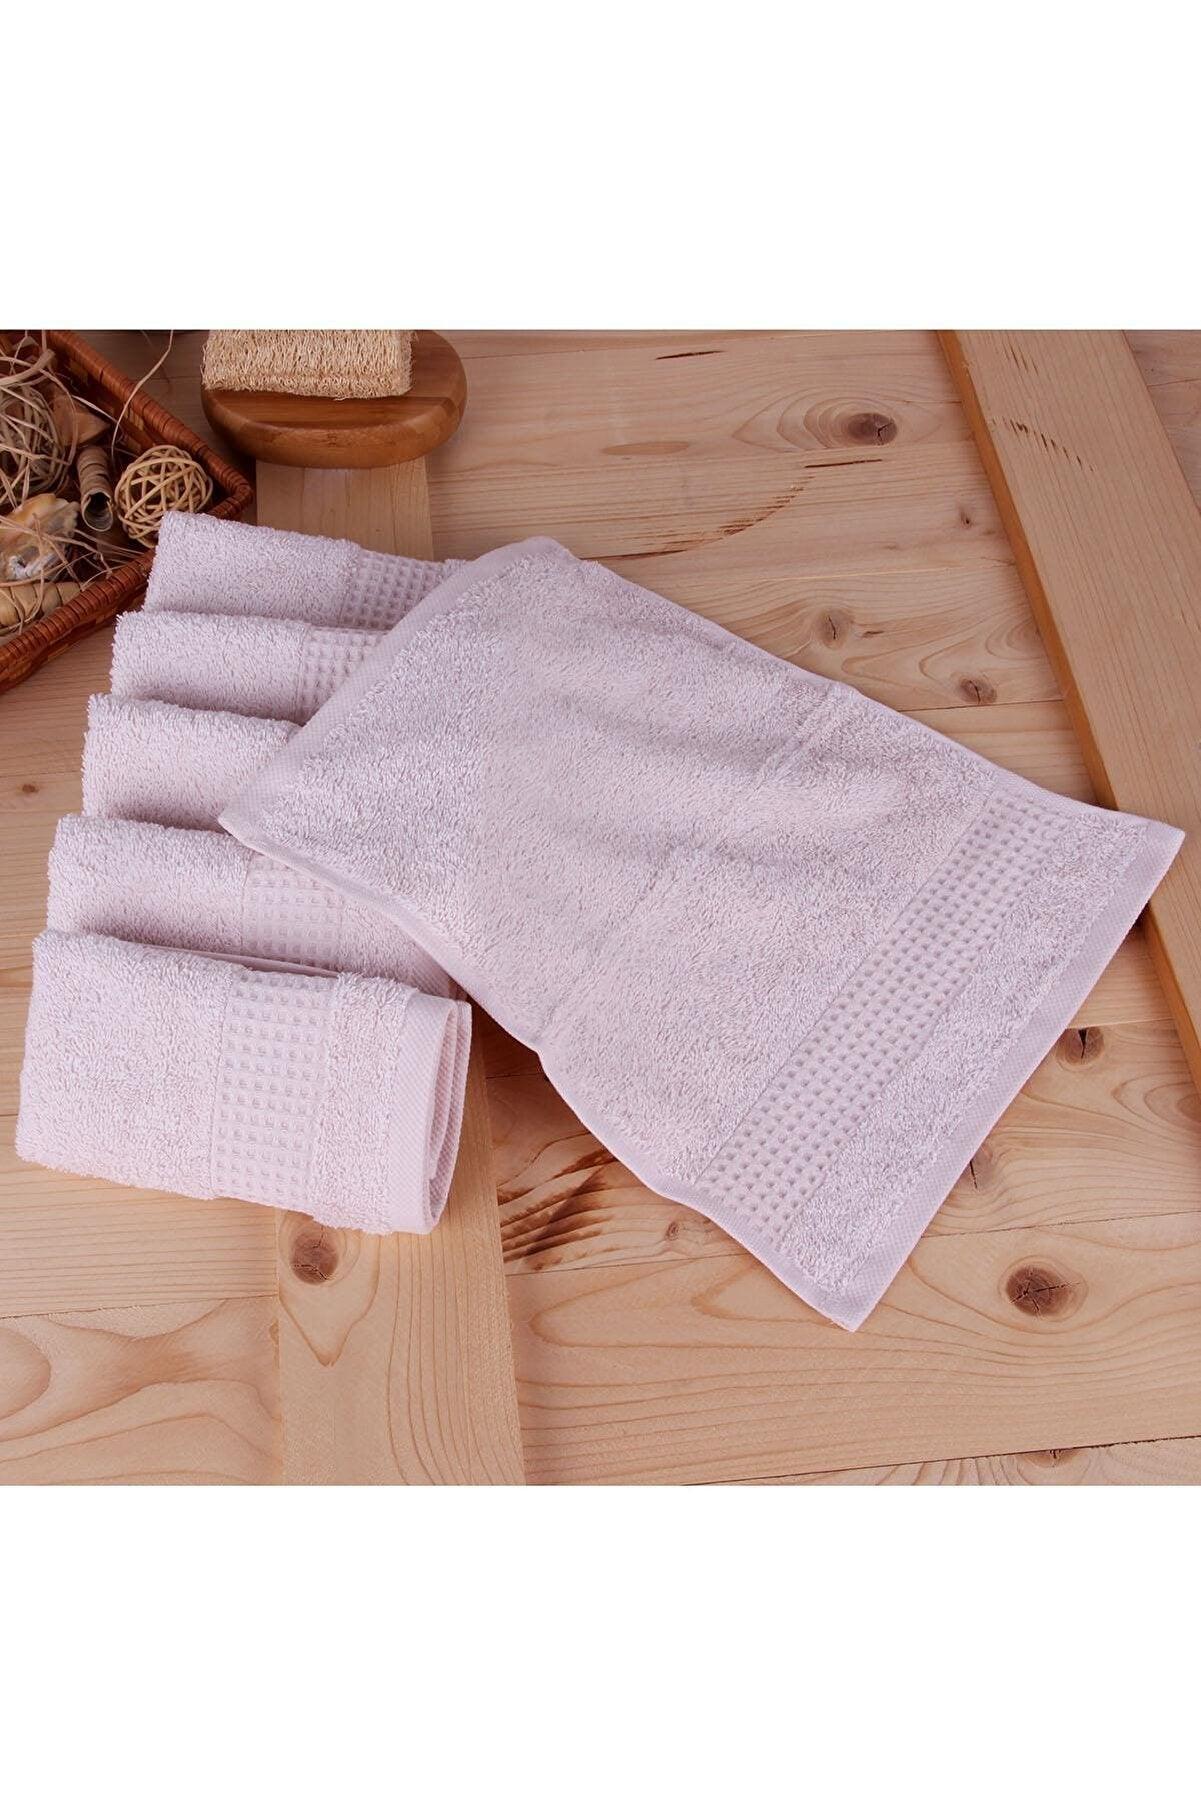 6 Piece 100% Cotton Washcloth Towel Set (Pink) - sinnohome 